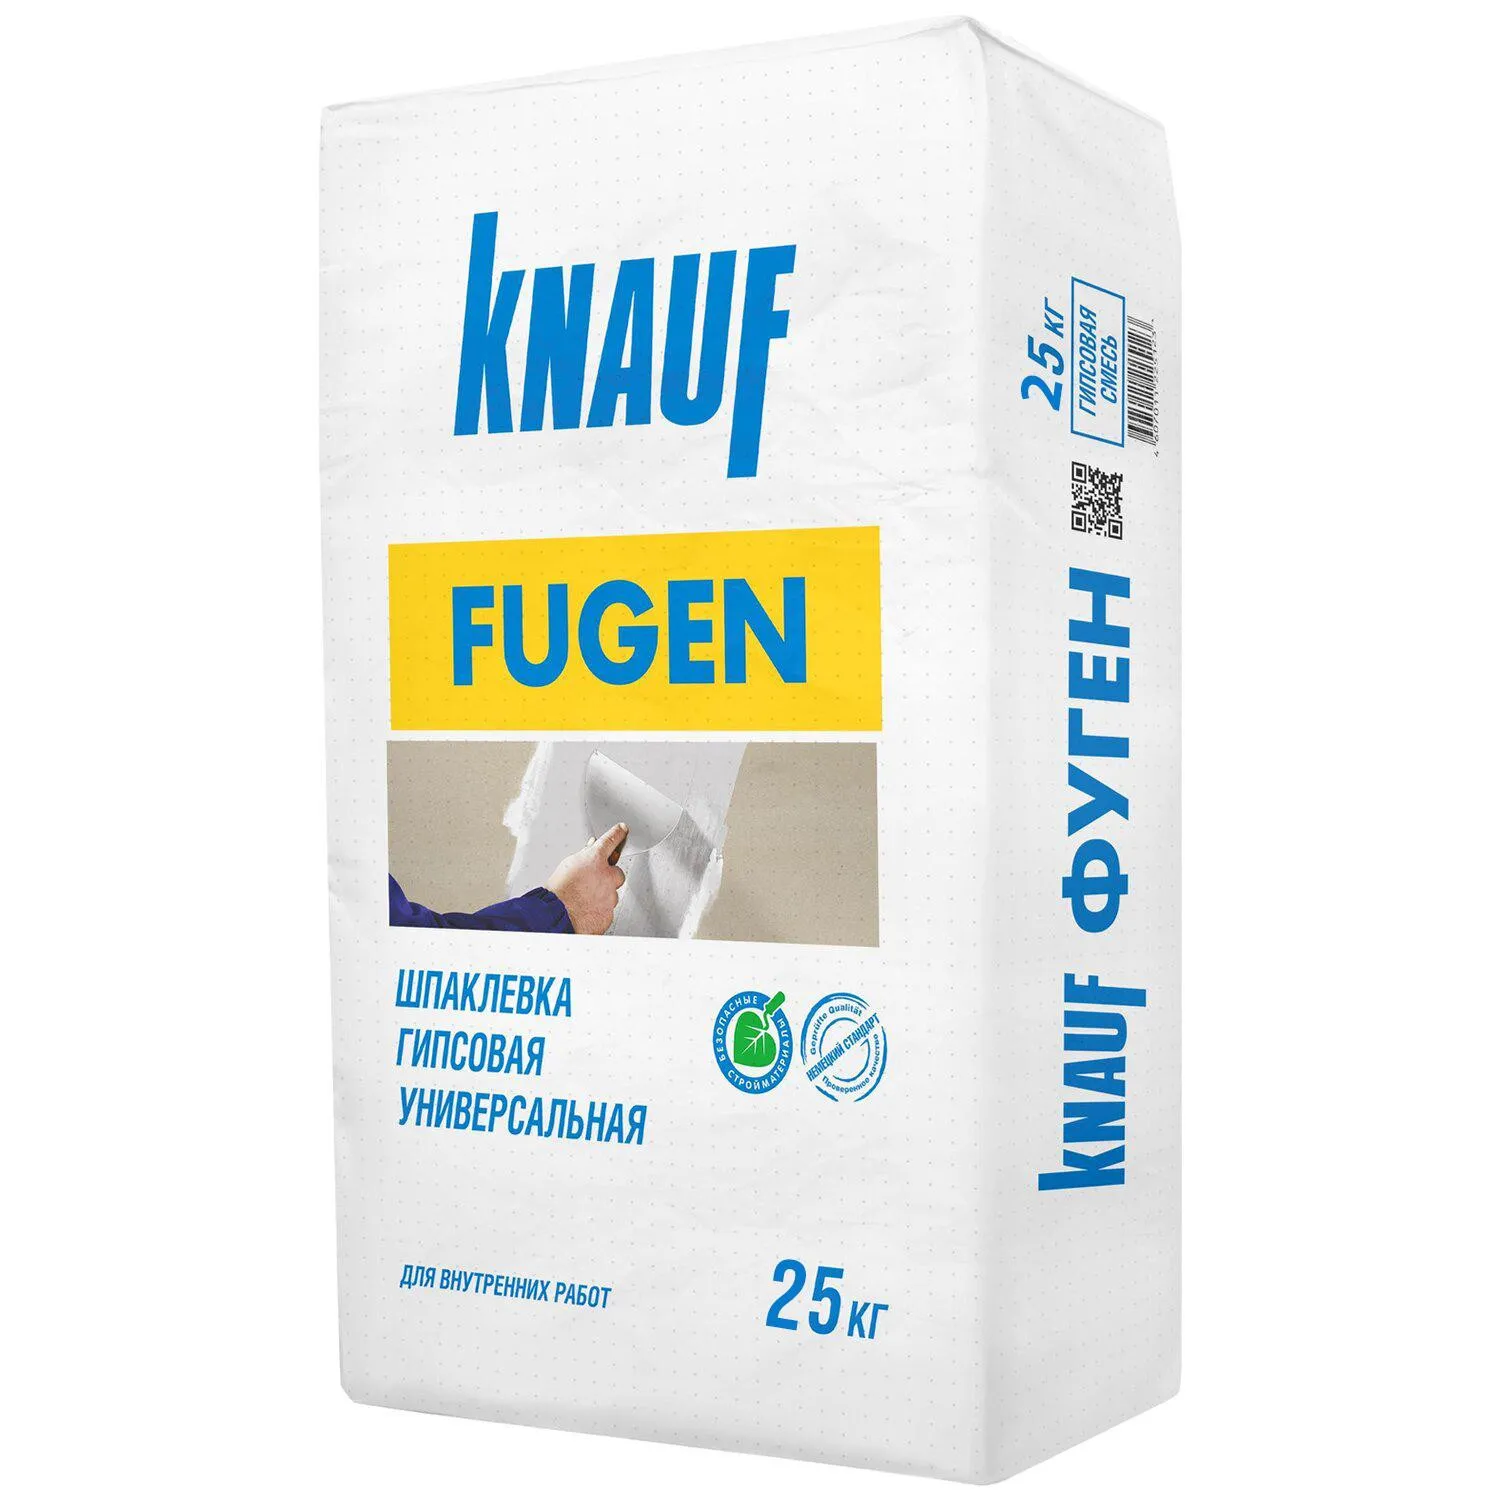 Putty Rotband Fugen KNAUF - 25 kg#1